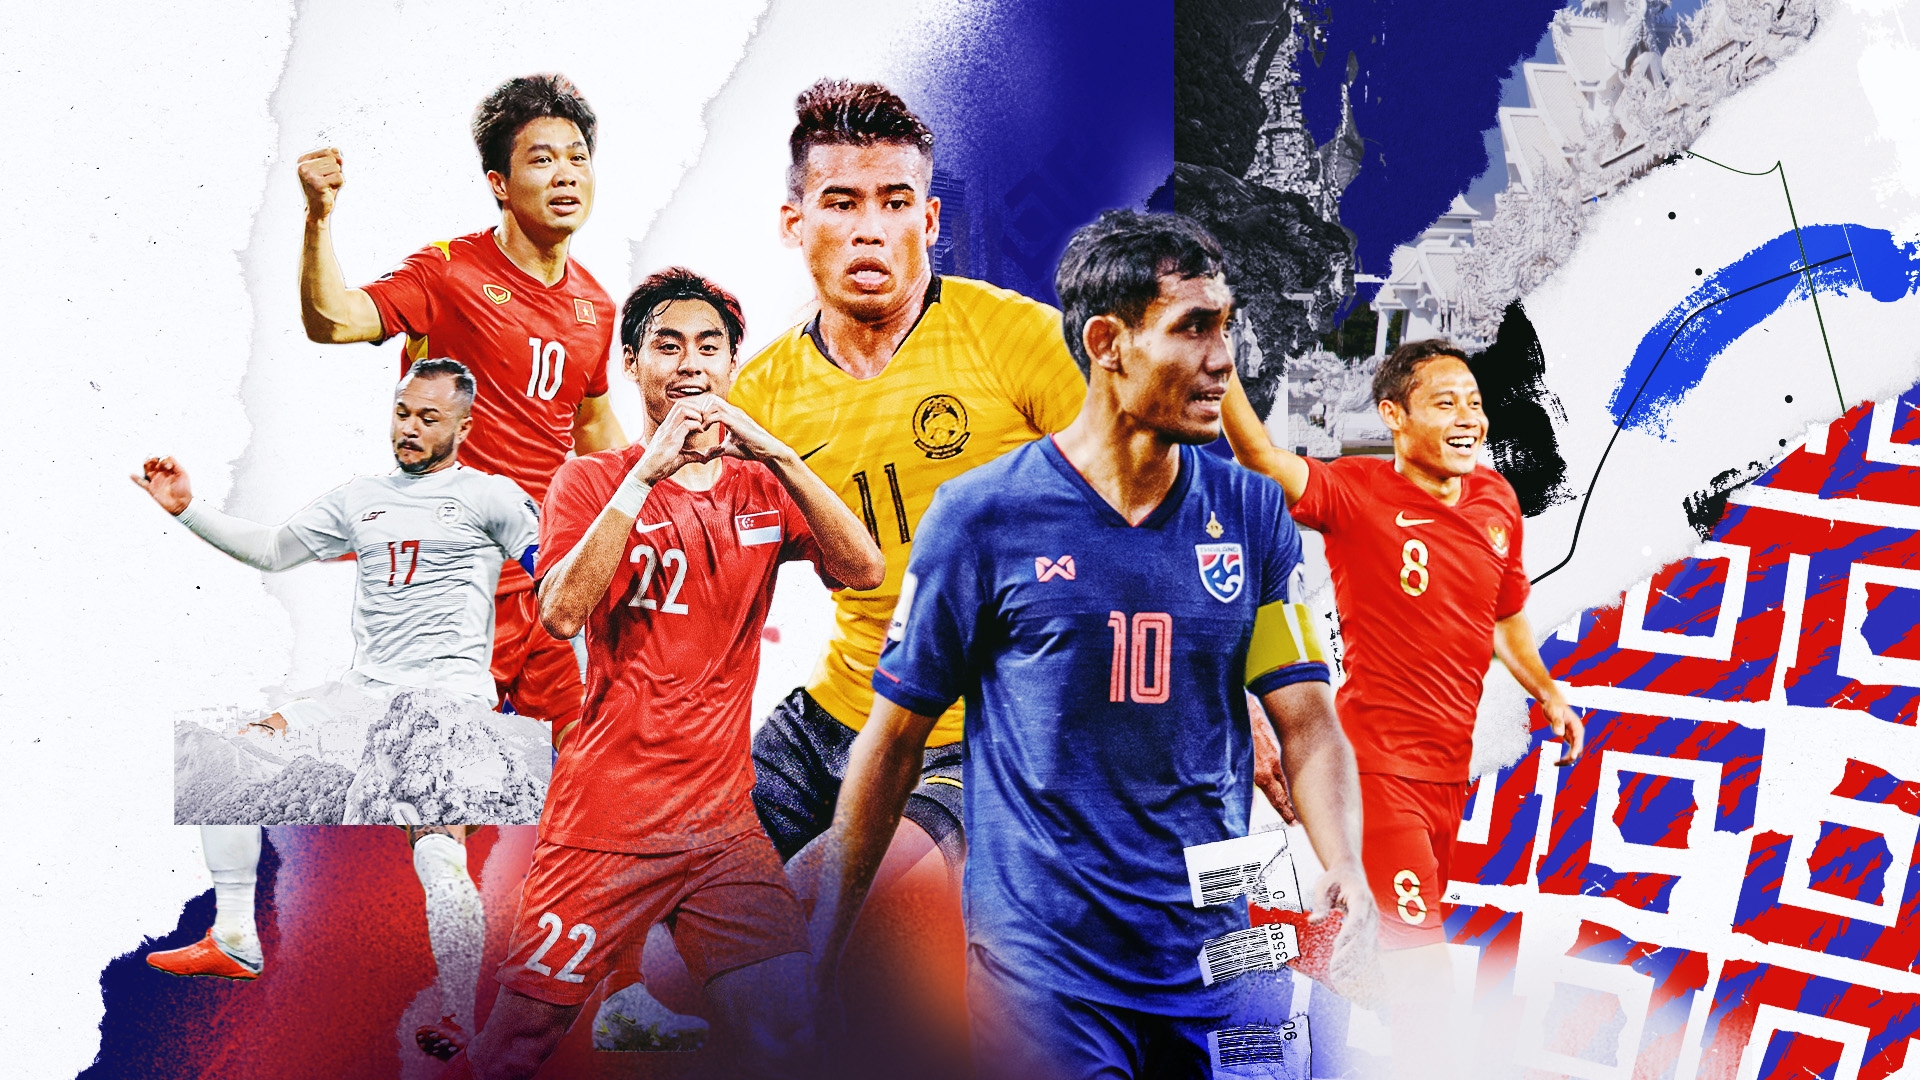 Aff suzuki cup 2021 indonesia